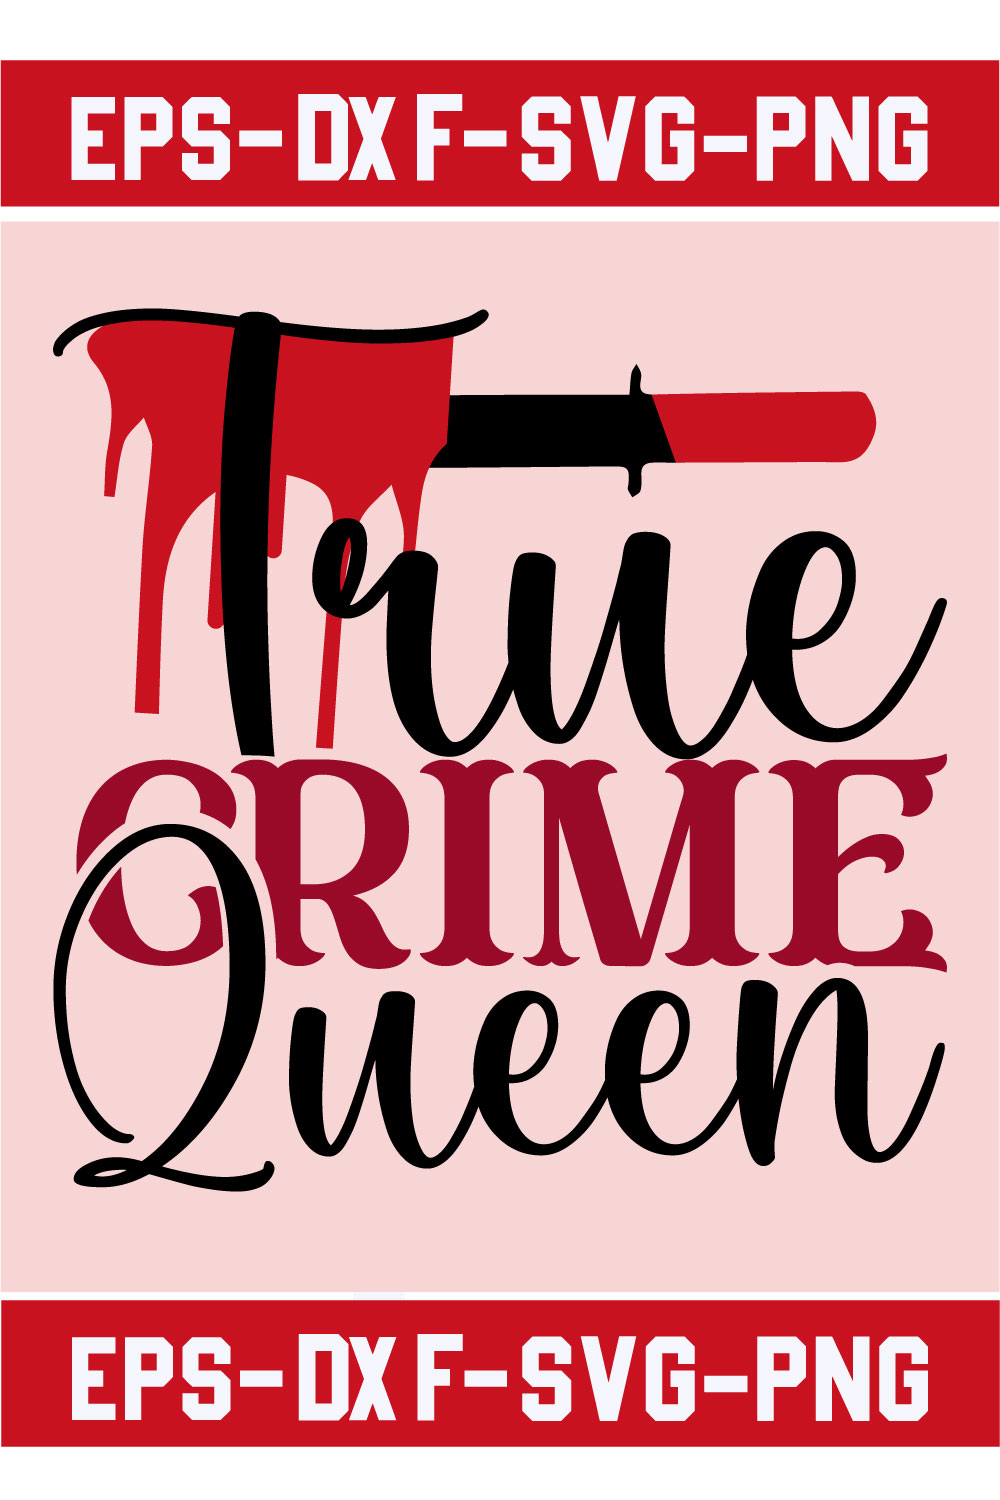 True Crime Queen pinterest preview image.